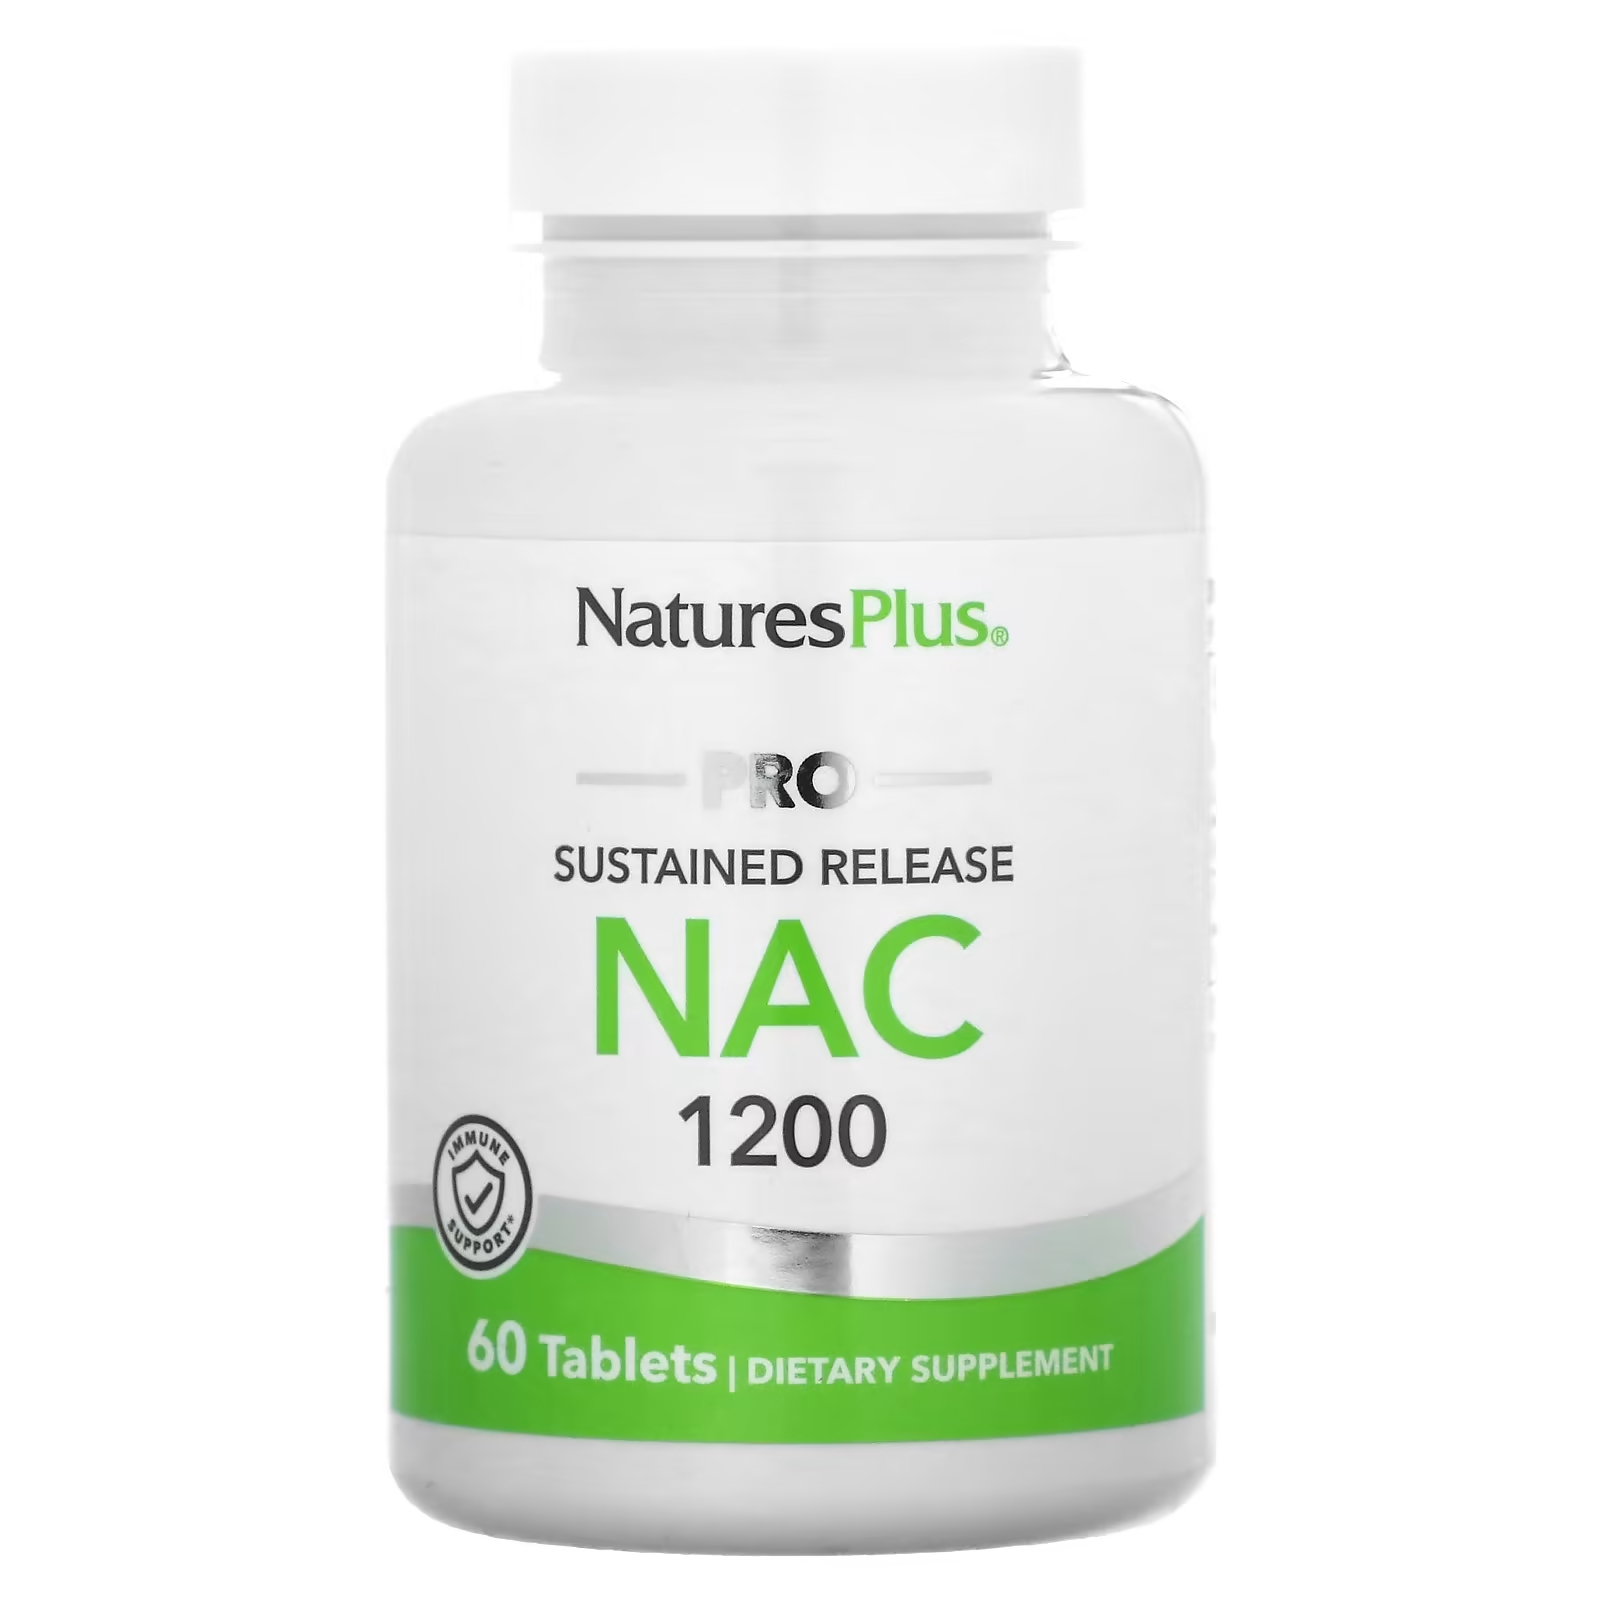 Пищевая добавка NaturesPlus Pro NAC 1200 без отдушек, 60 таблеток